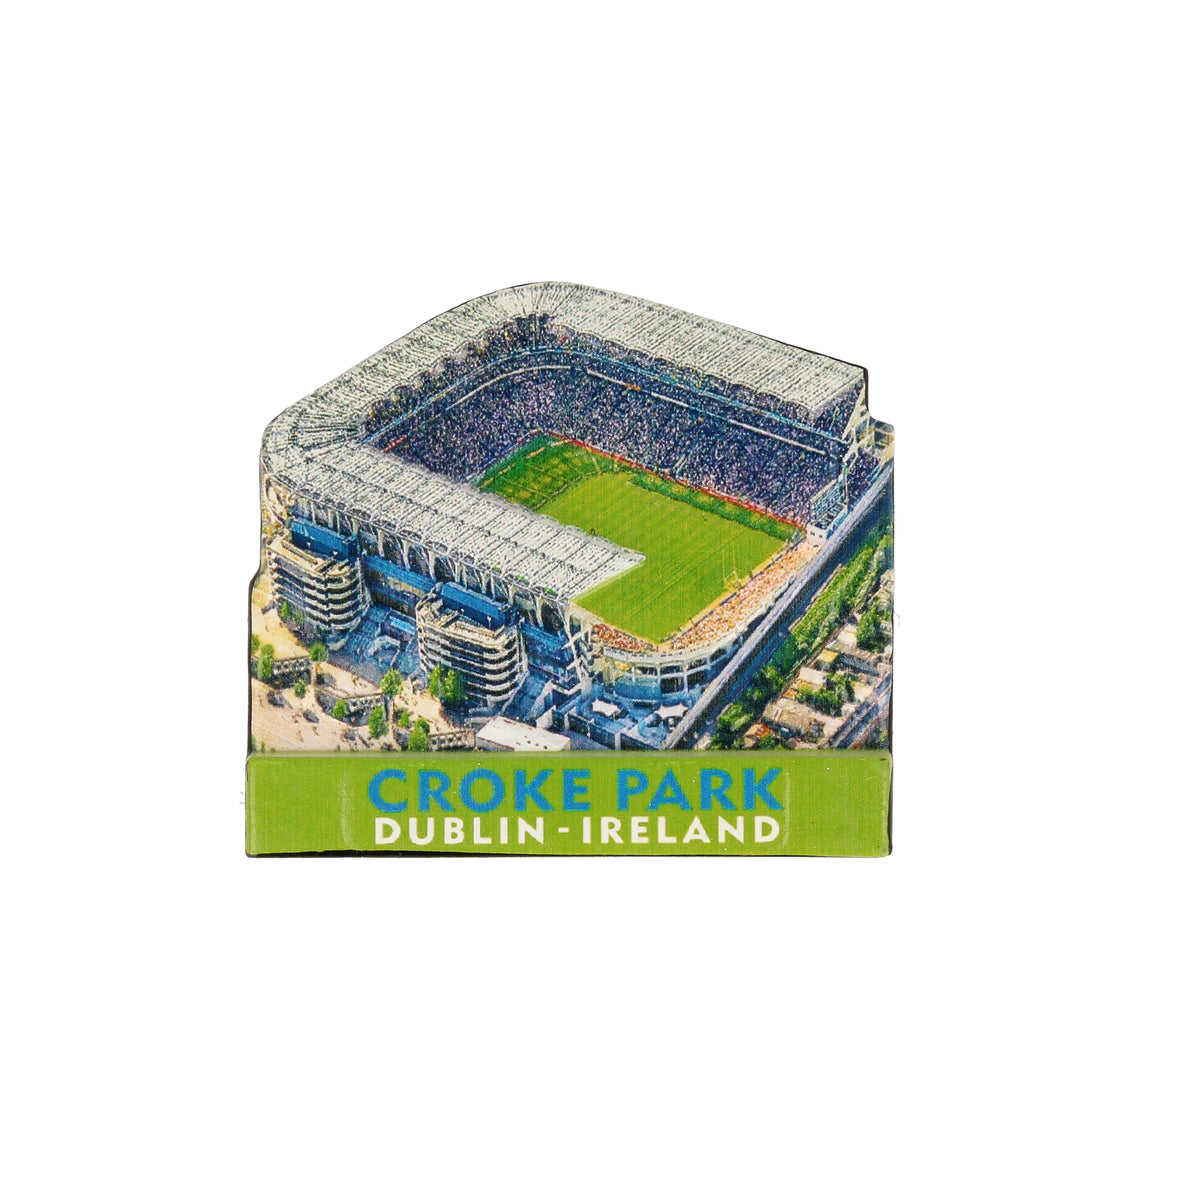 Stadium Magnets for Sale